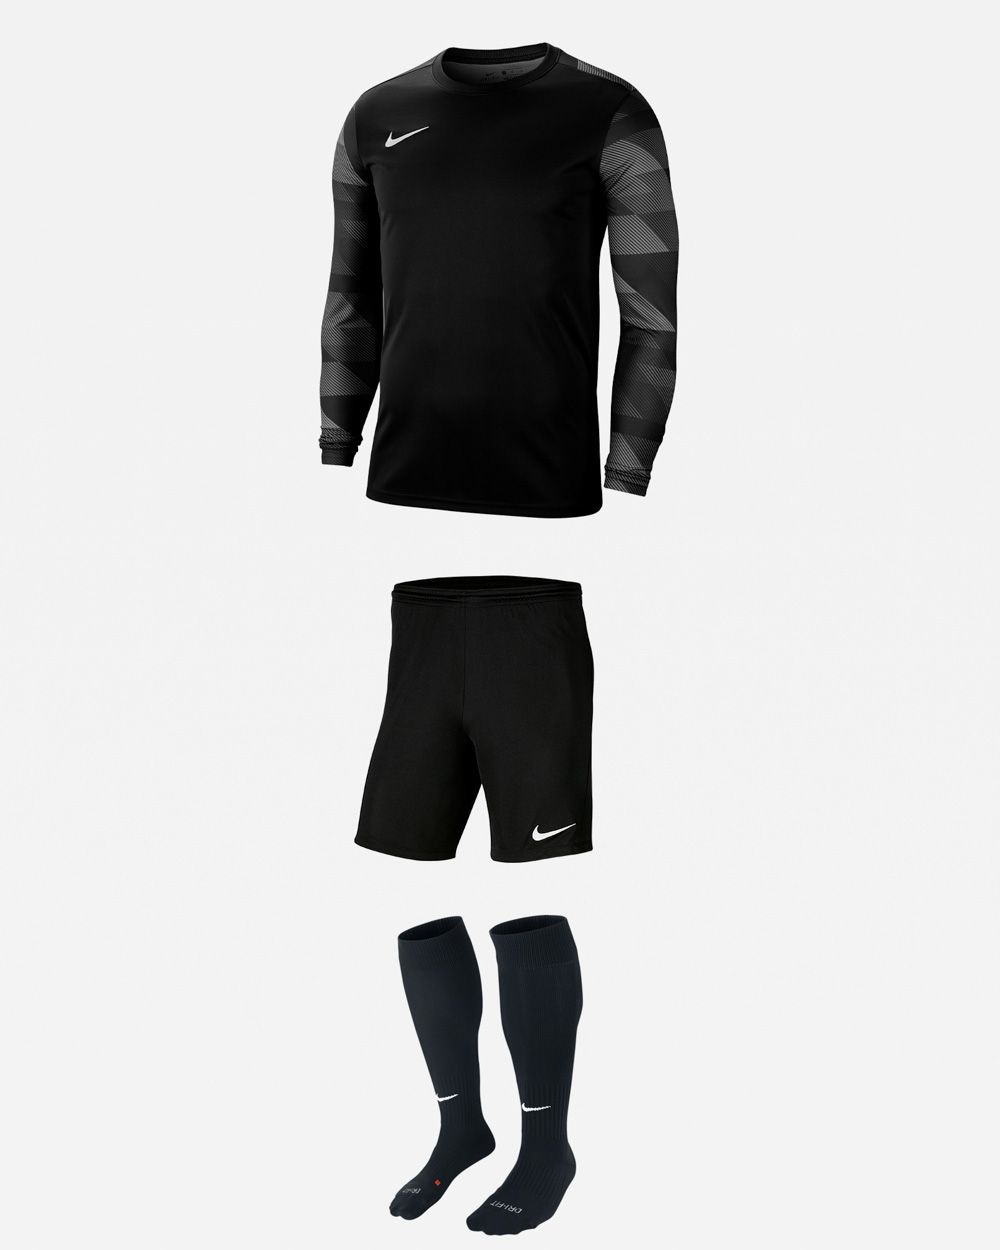 Nike Youth Park IV Goalkeeper Jersey, Black / ym